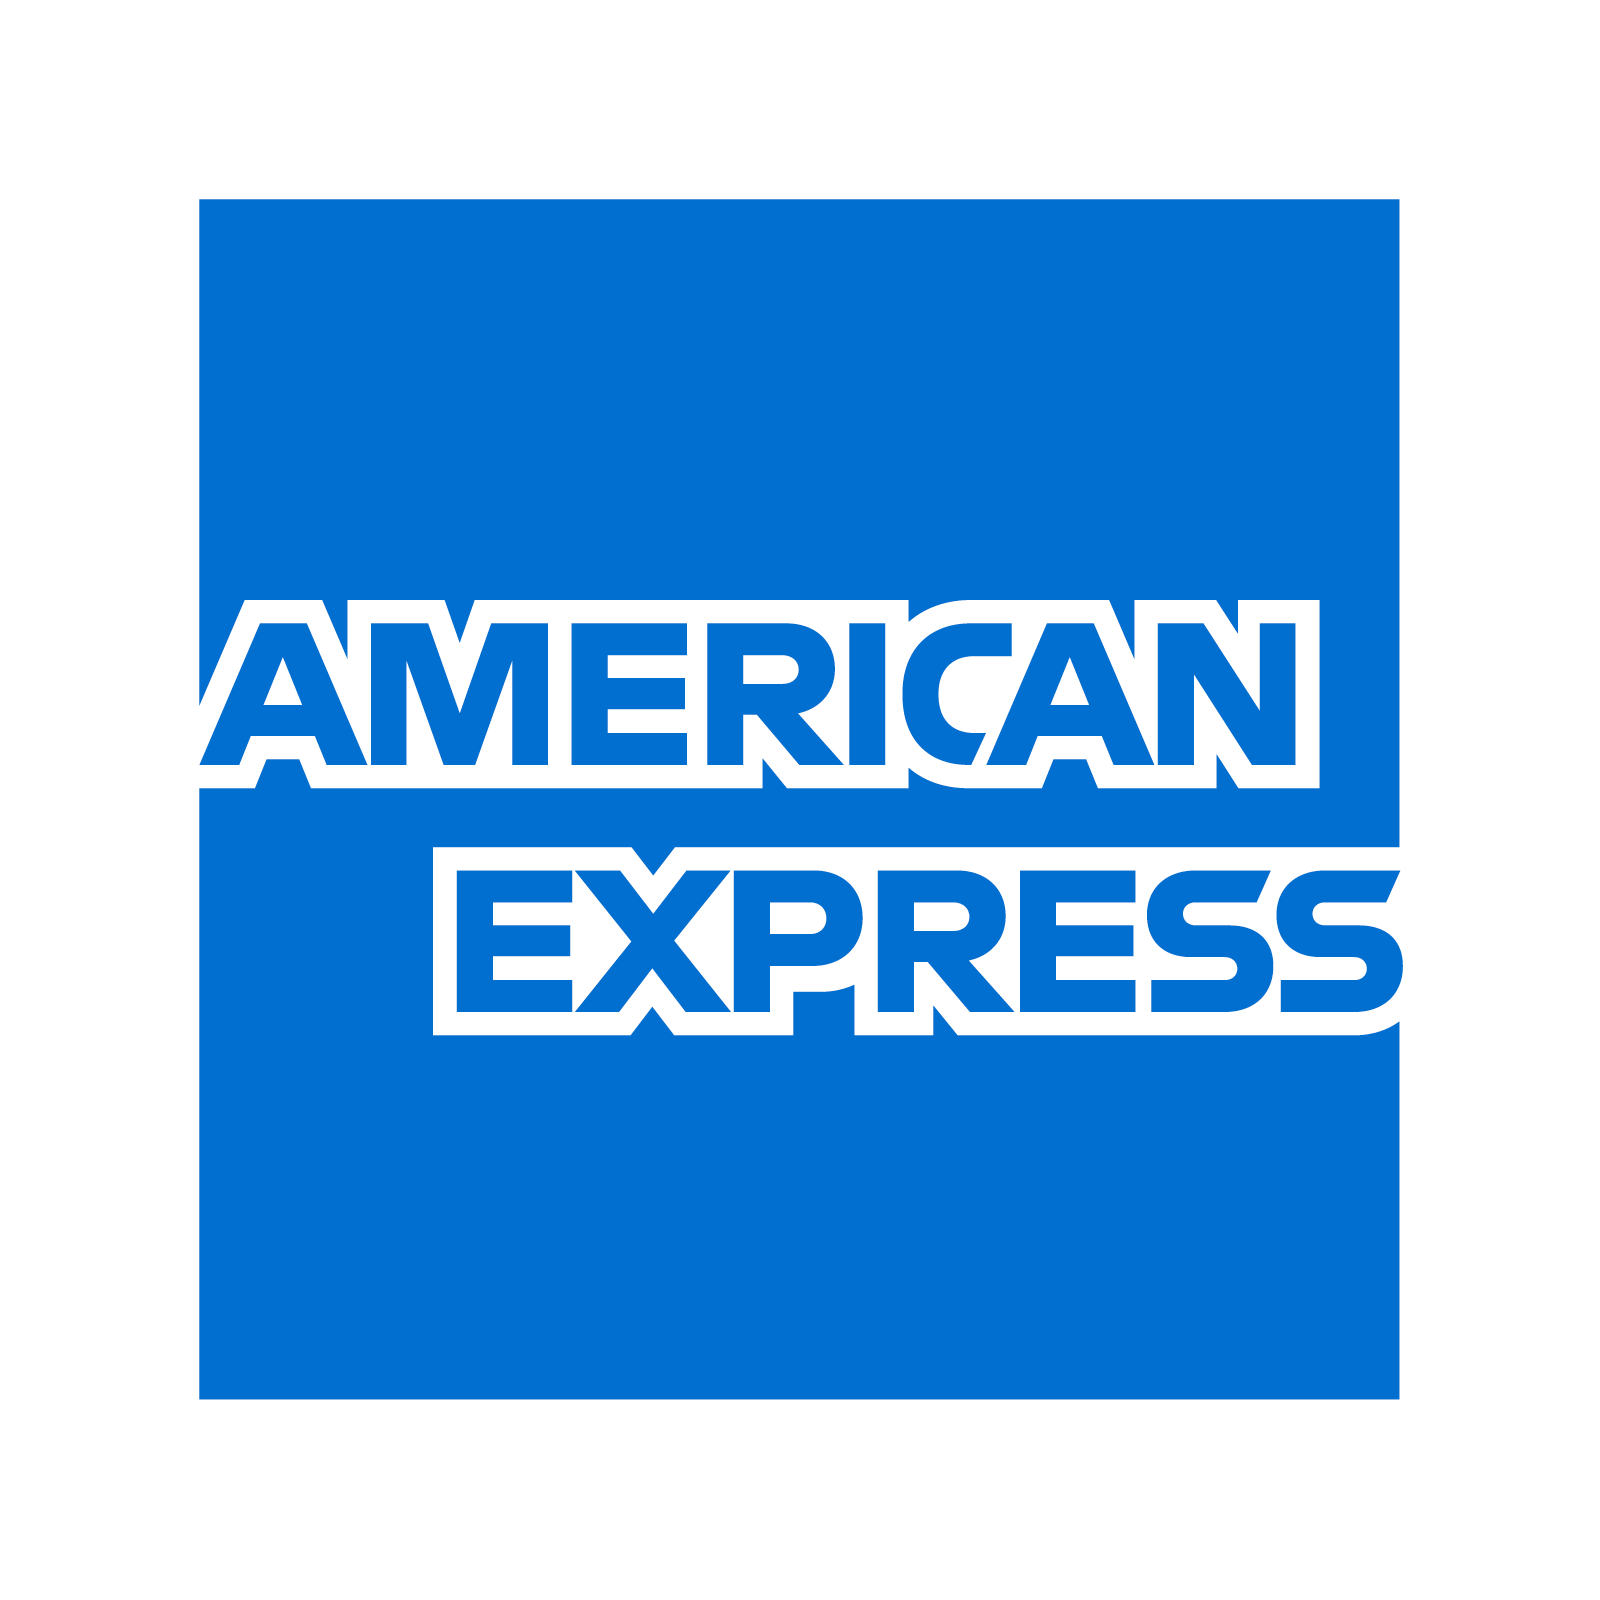 American Express Logo PNG Gambar berkualitas tinggi